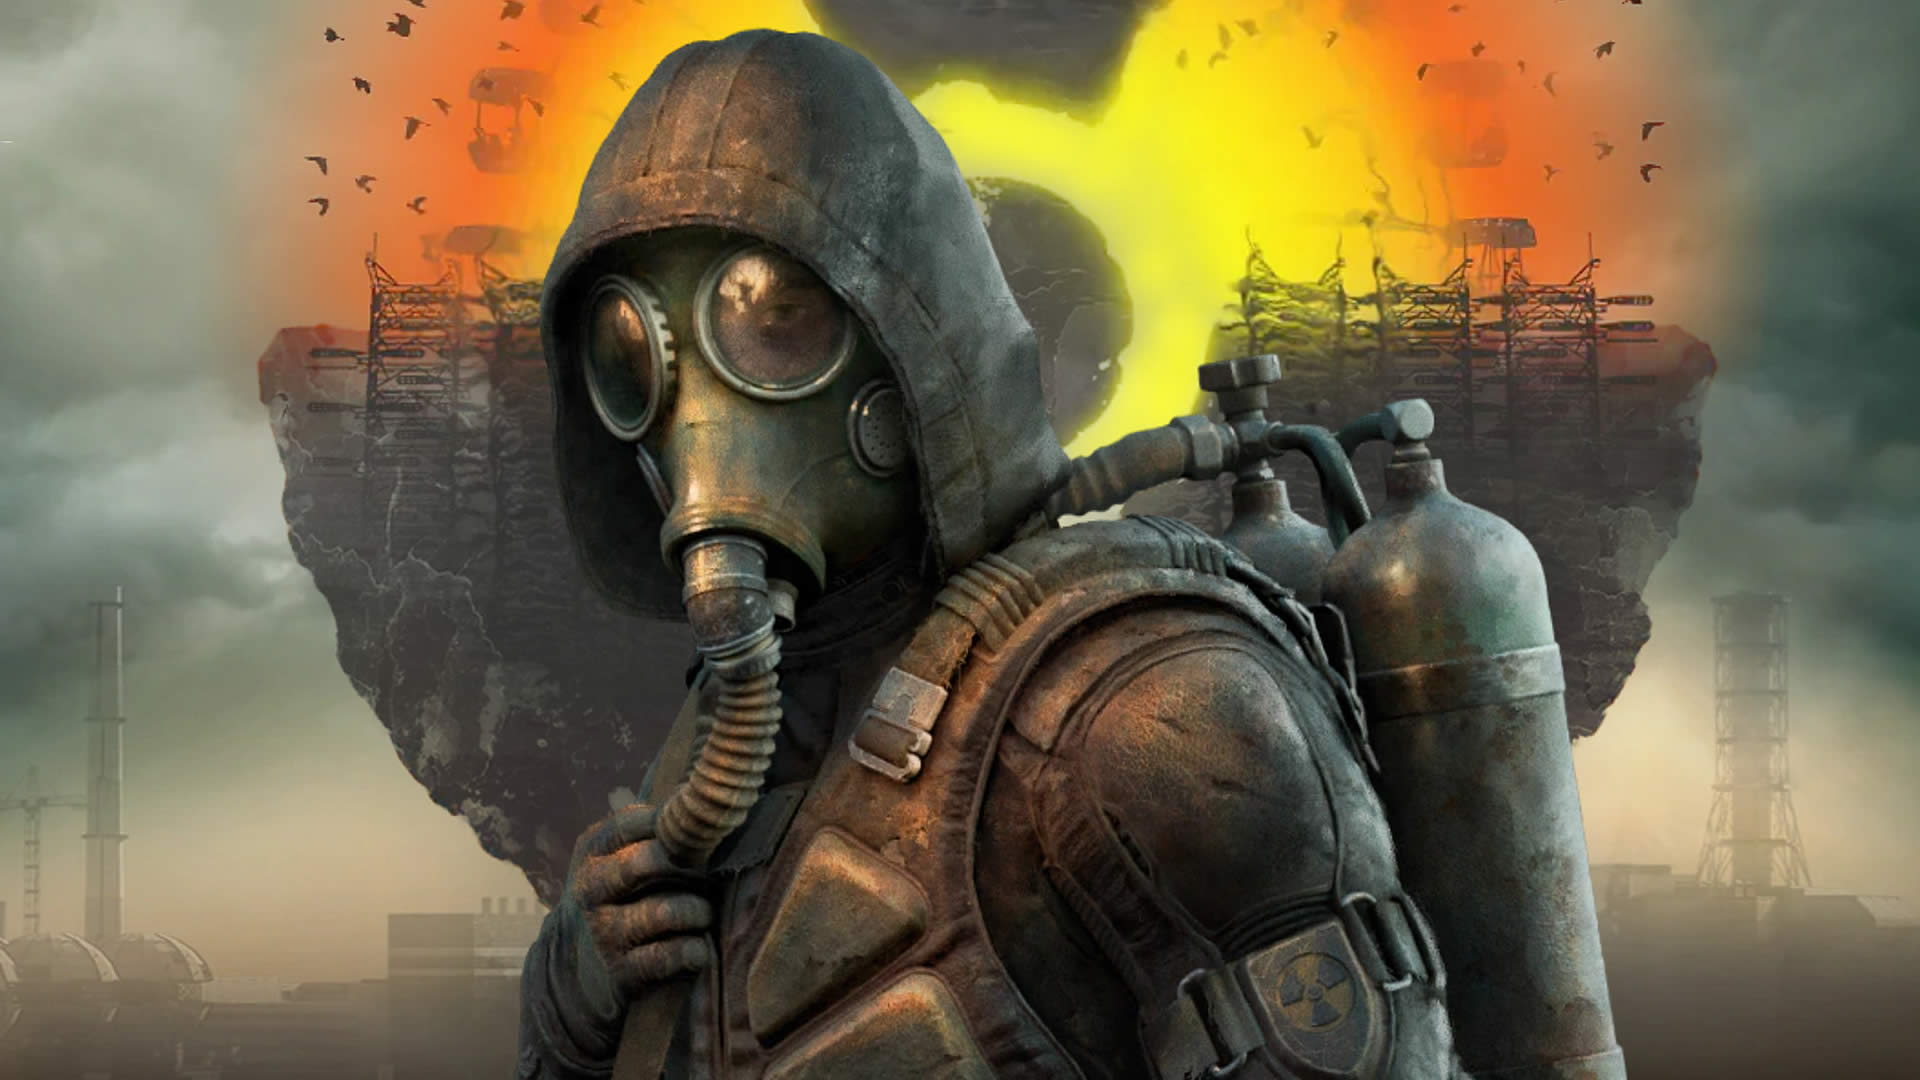 STALKER 2 Heart of Chornobyl Ultimate Edition Steam